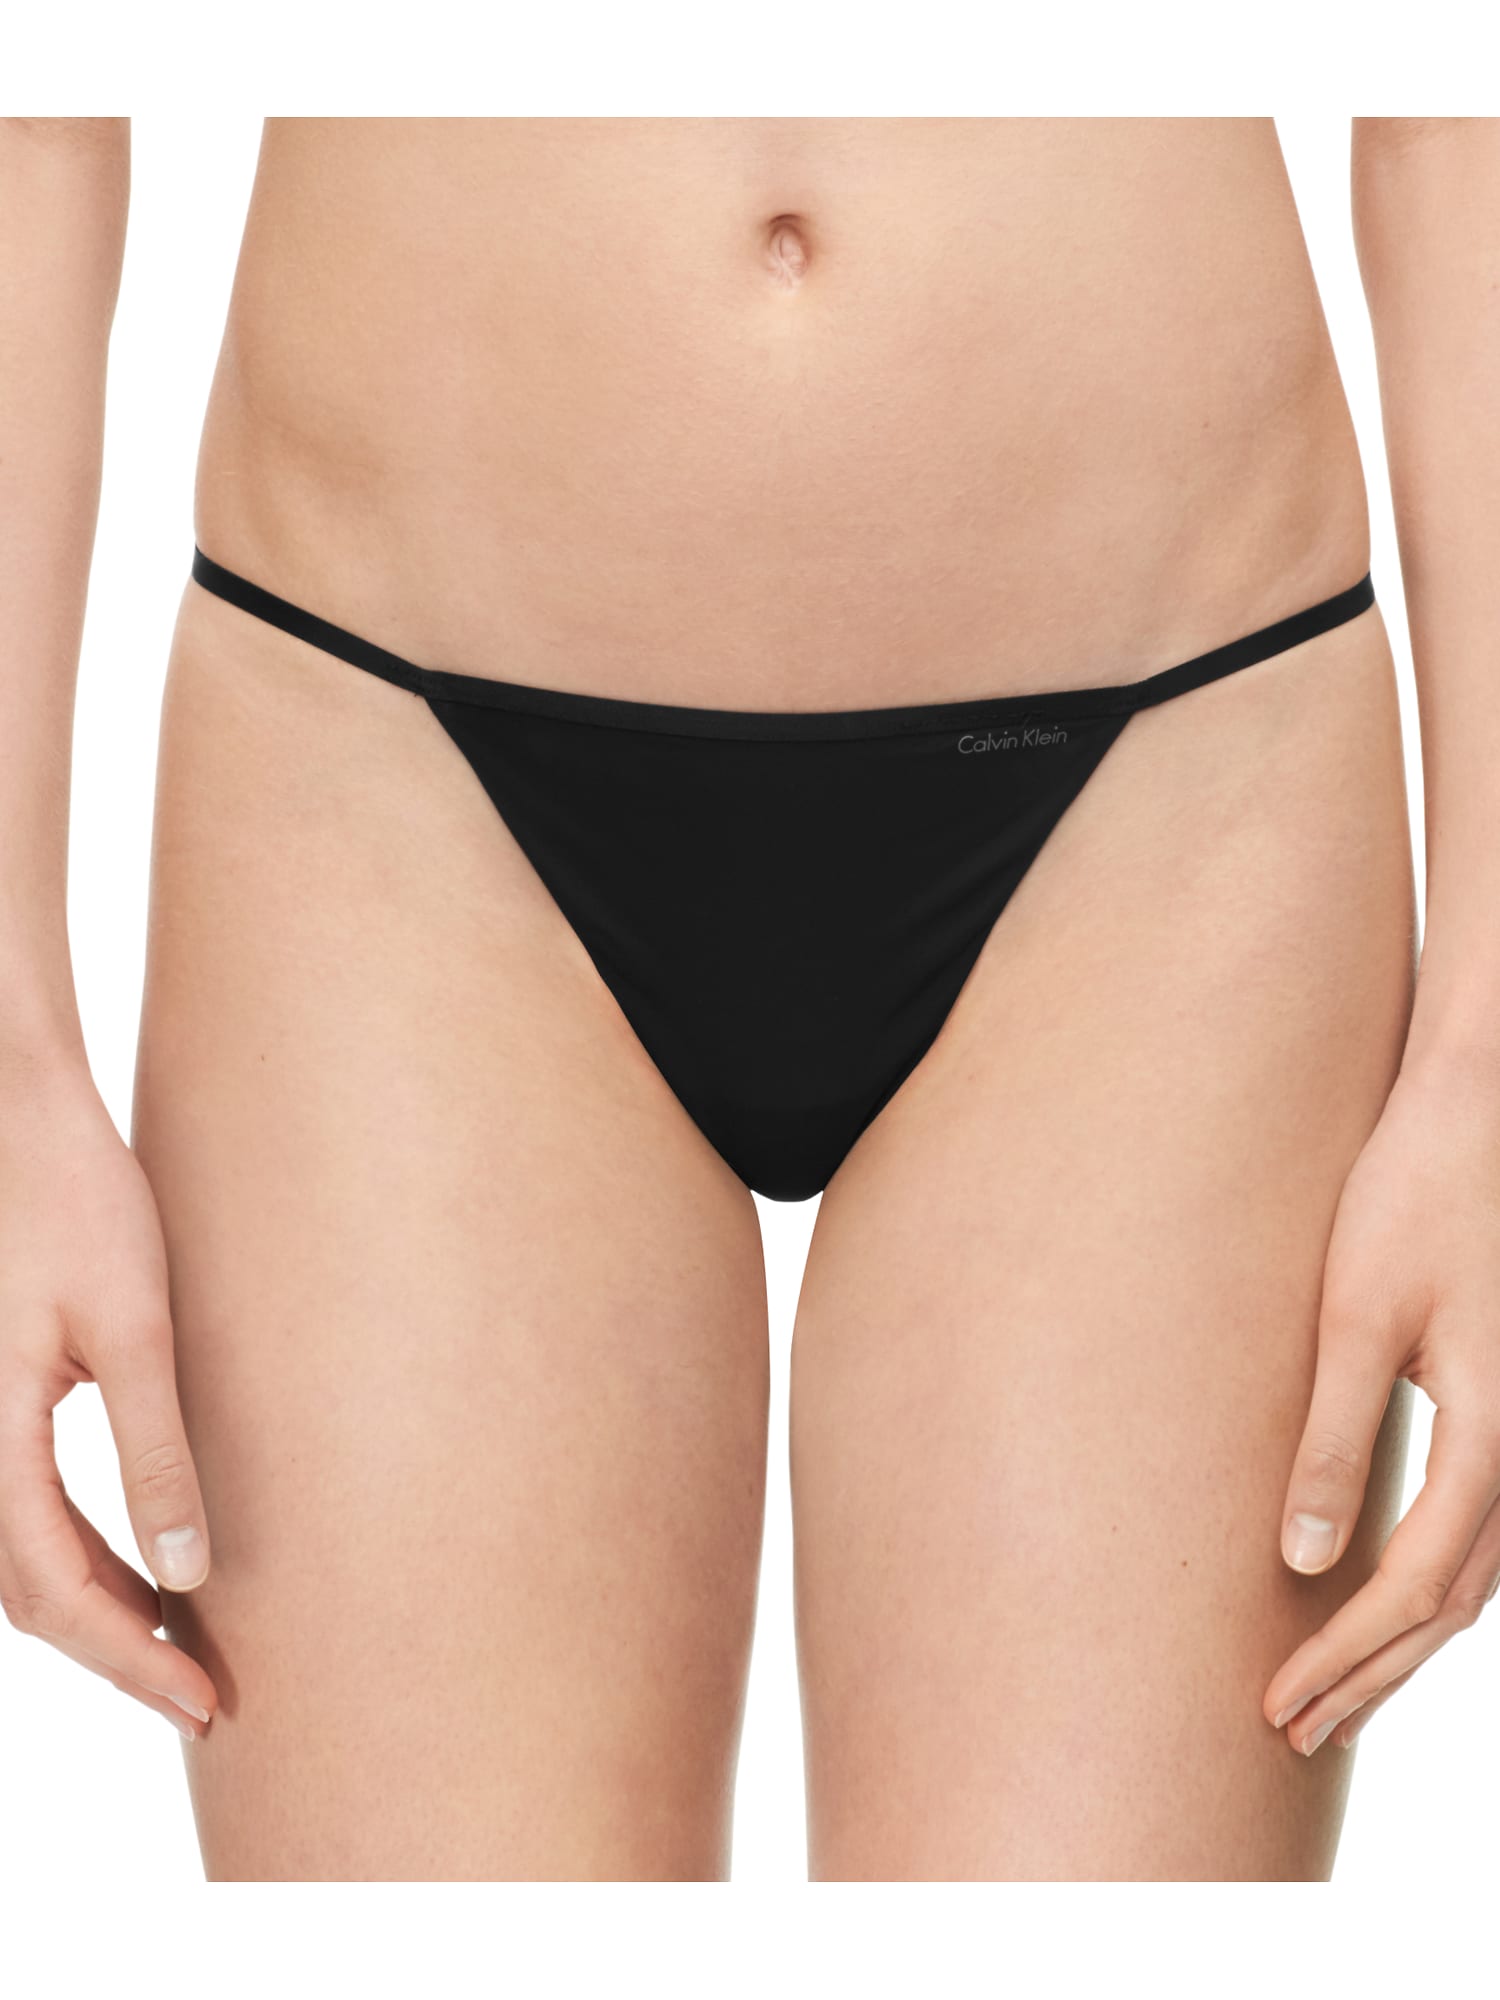 Calvin Klein Microfiber String Thong Panty - Women's | eBay